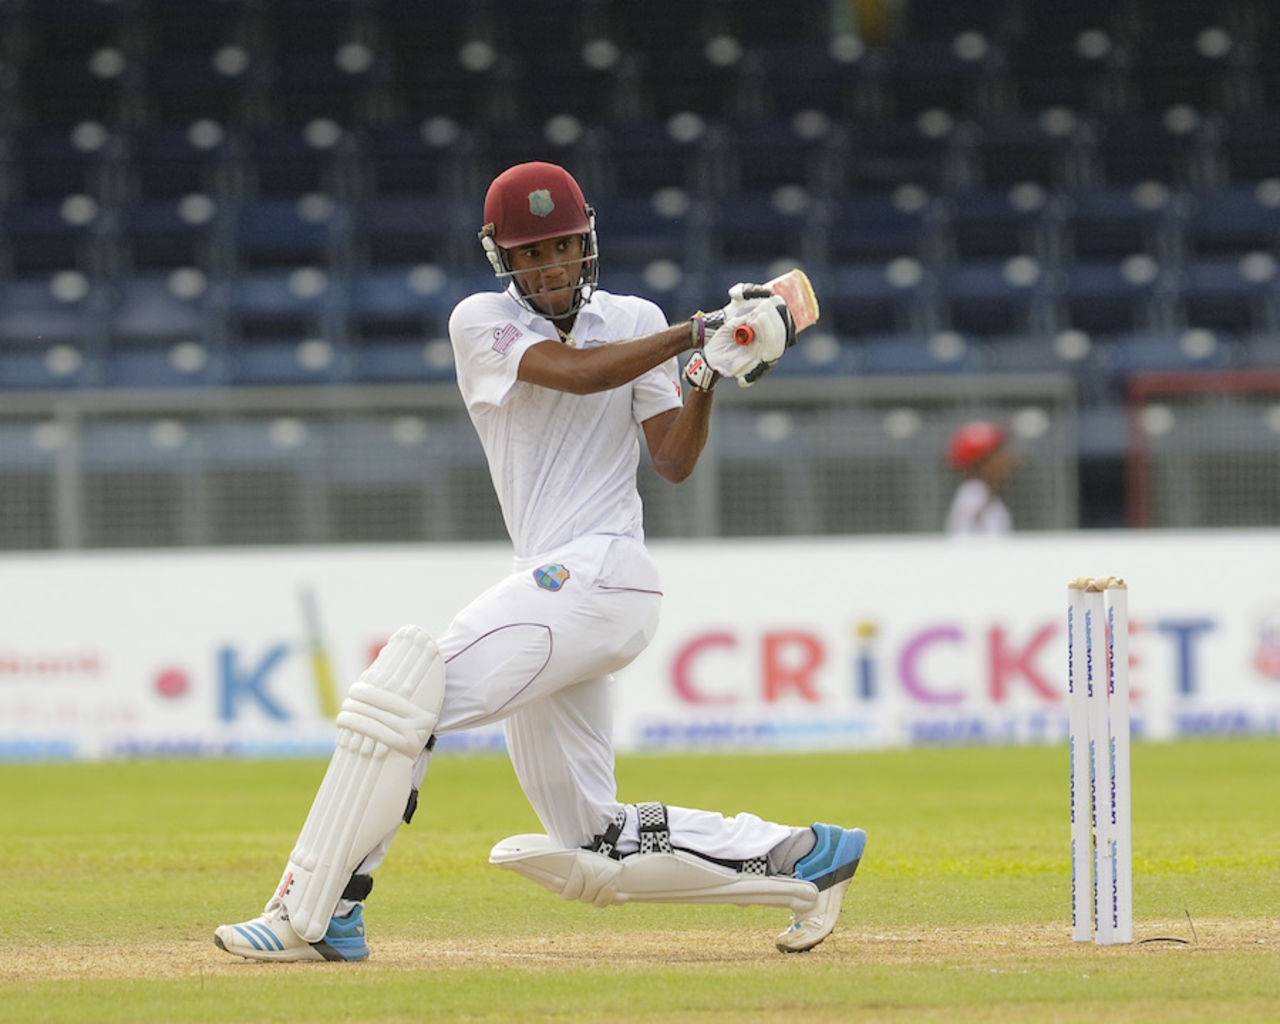 Kraigg Brathwaite targets the leg side, West Indies v Bangladesh, 1st Test, St Vincent, 2nd day, September 6, 2014